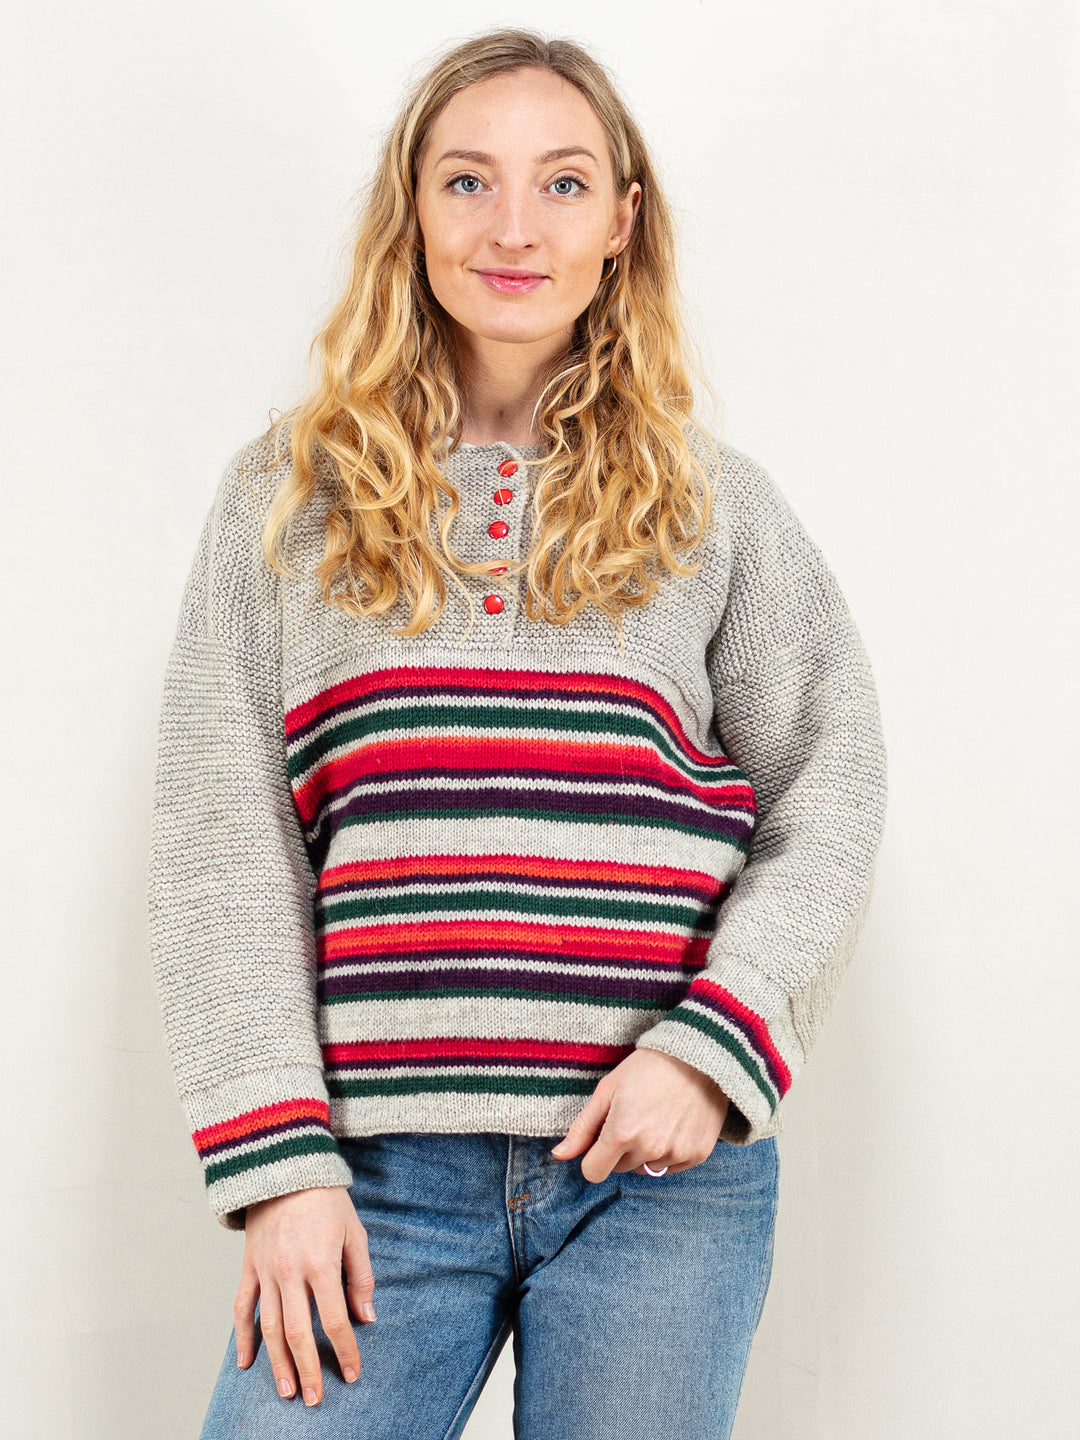 Grey Striped Sweater women vintage 80's handmade knitted wool blend henley neckline pullover colourful stripe pattern jumper size medium